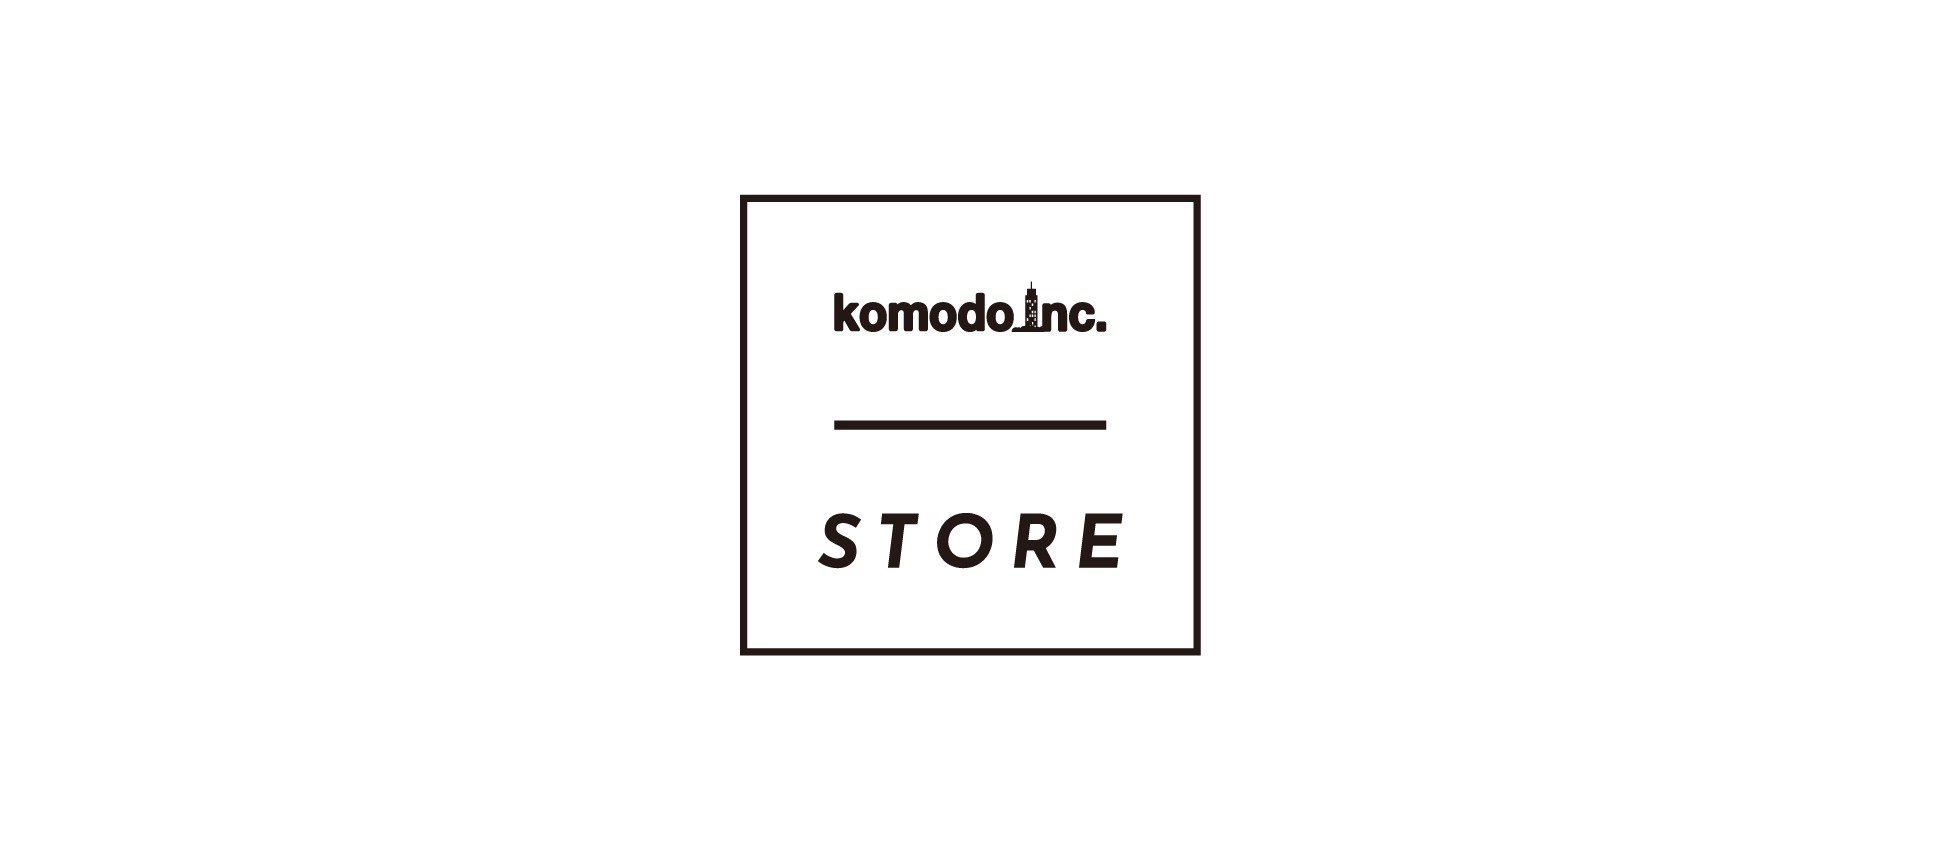 komodo Inc. STORE